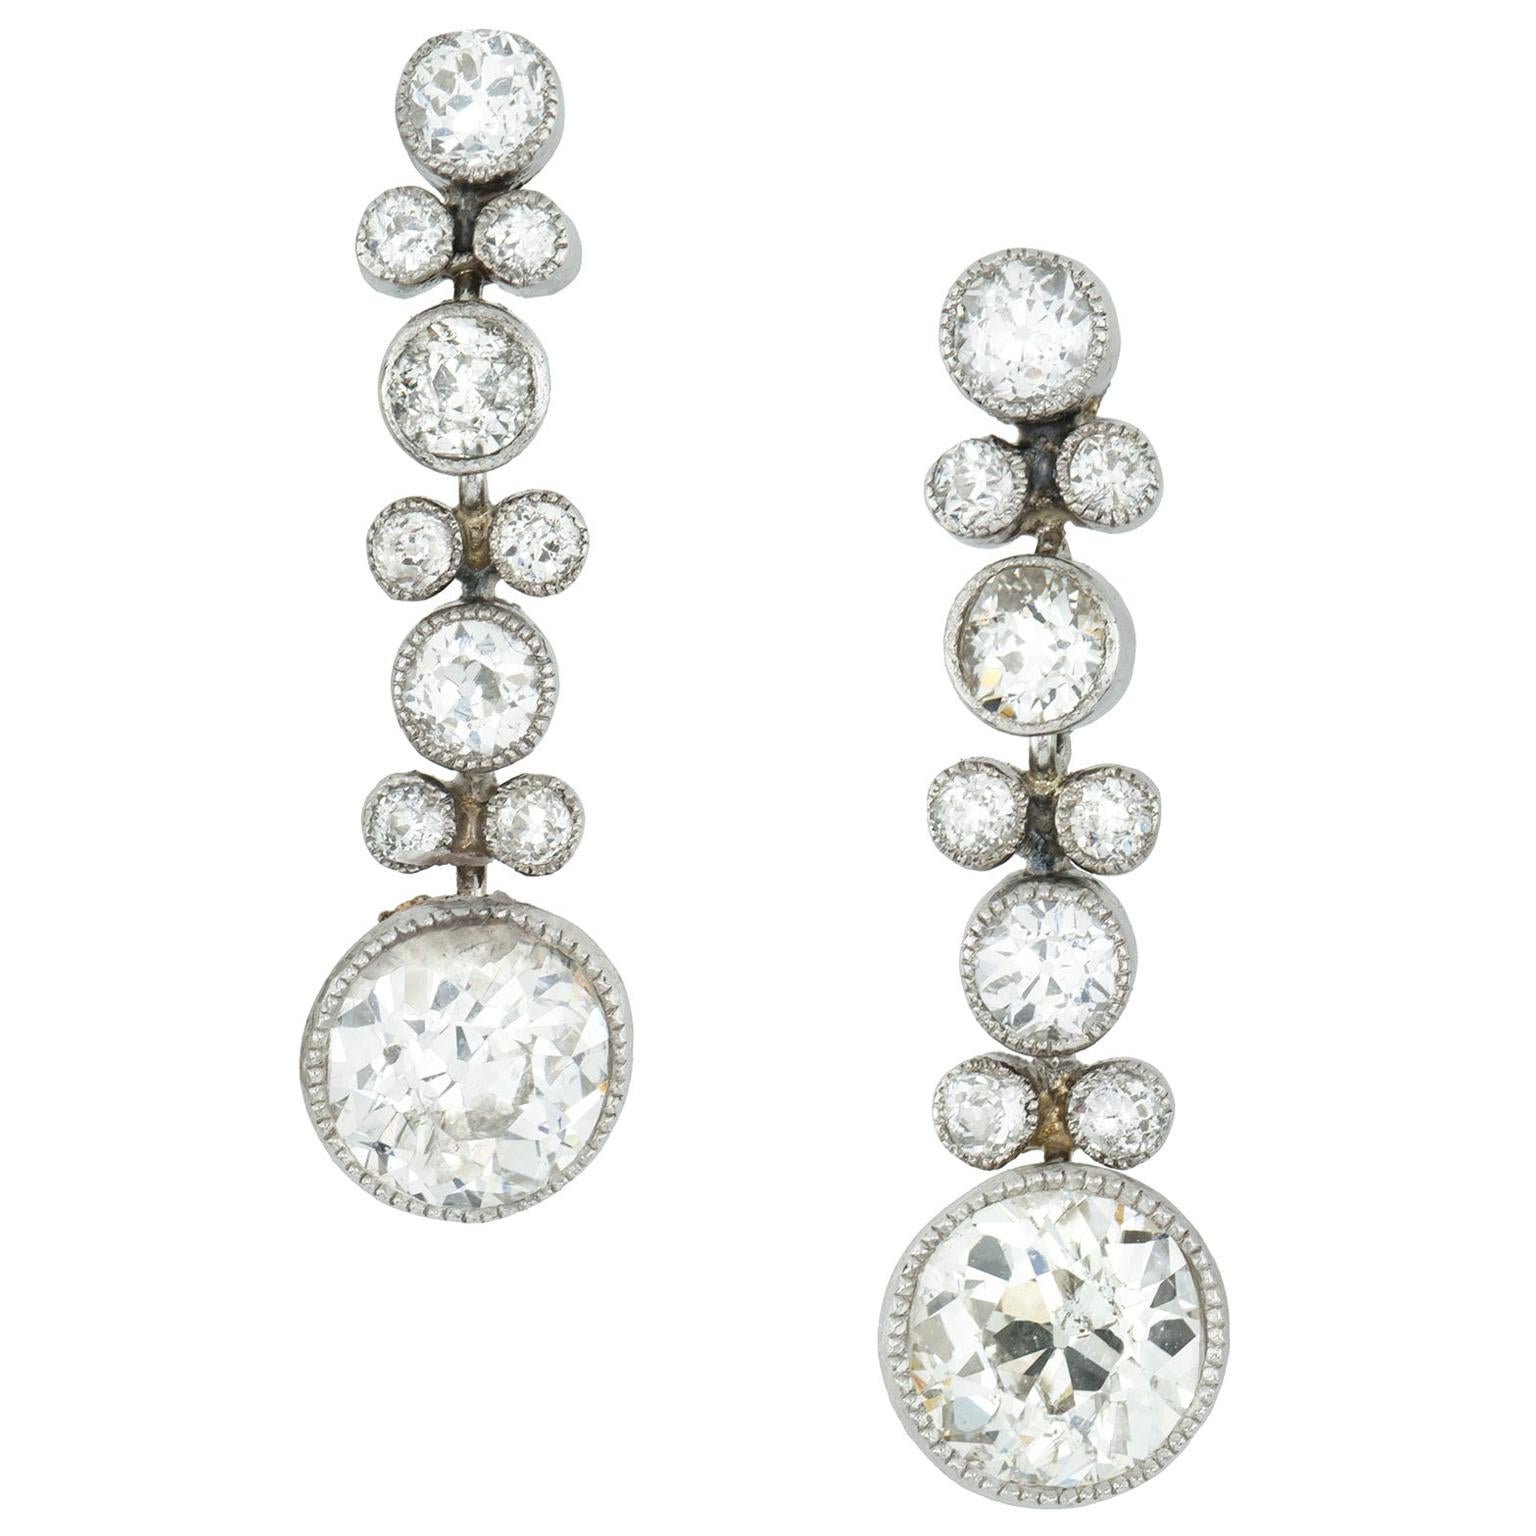 Pair of Edwardian Diamond Drop Earrings